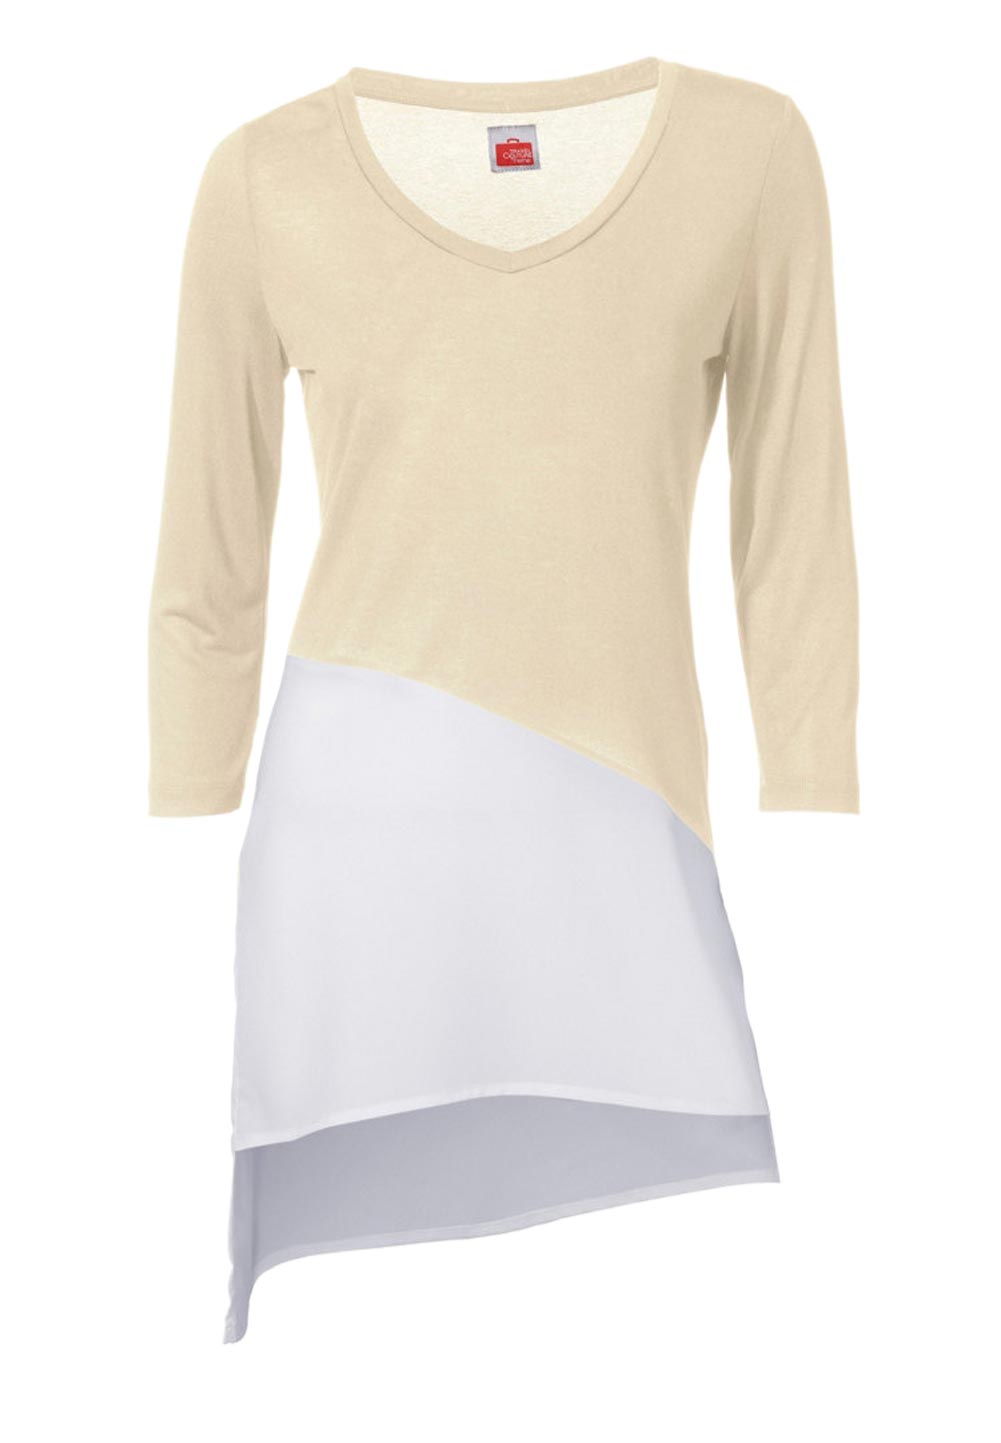 RICK CARDONA Damen Designer-Shirtbluse, sand-weiß